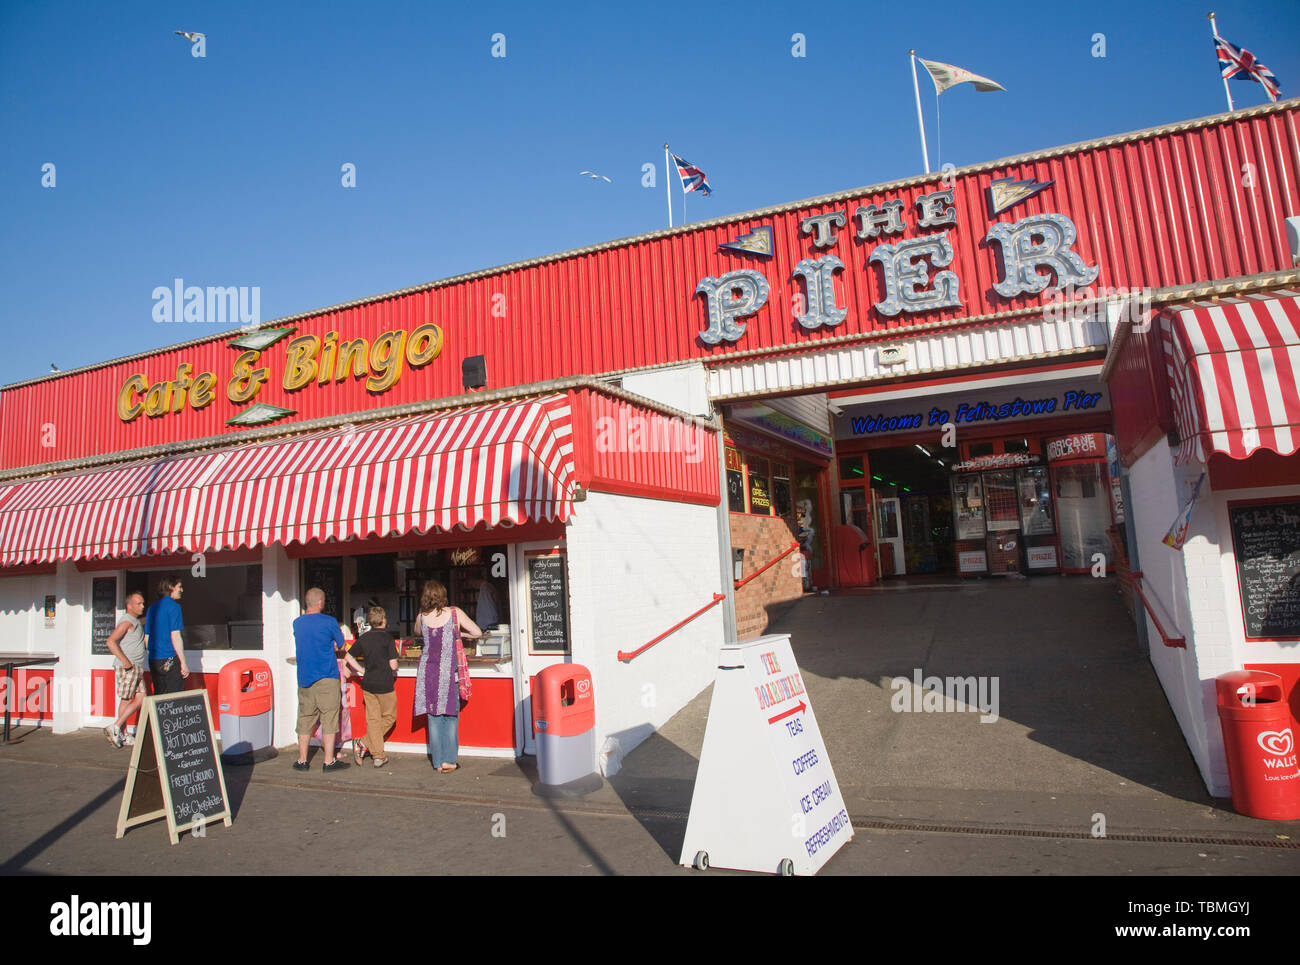 Cafe and bingo, amusement arcade entrance at the  pier Felixstowe, Suffolk, England, UK Stock Photo